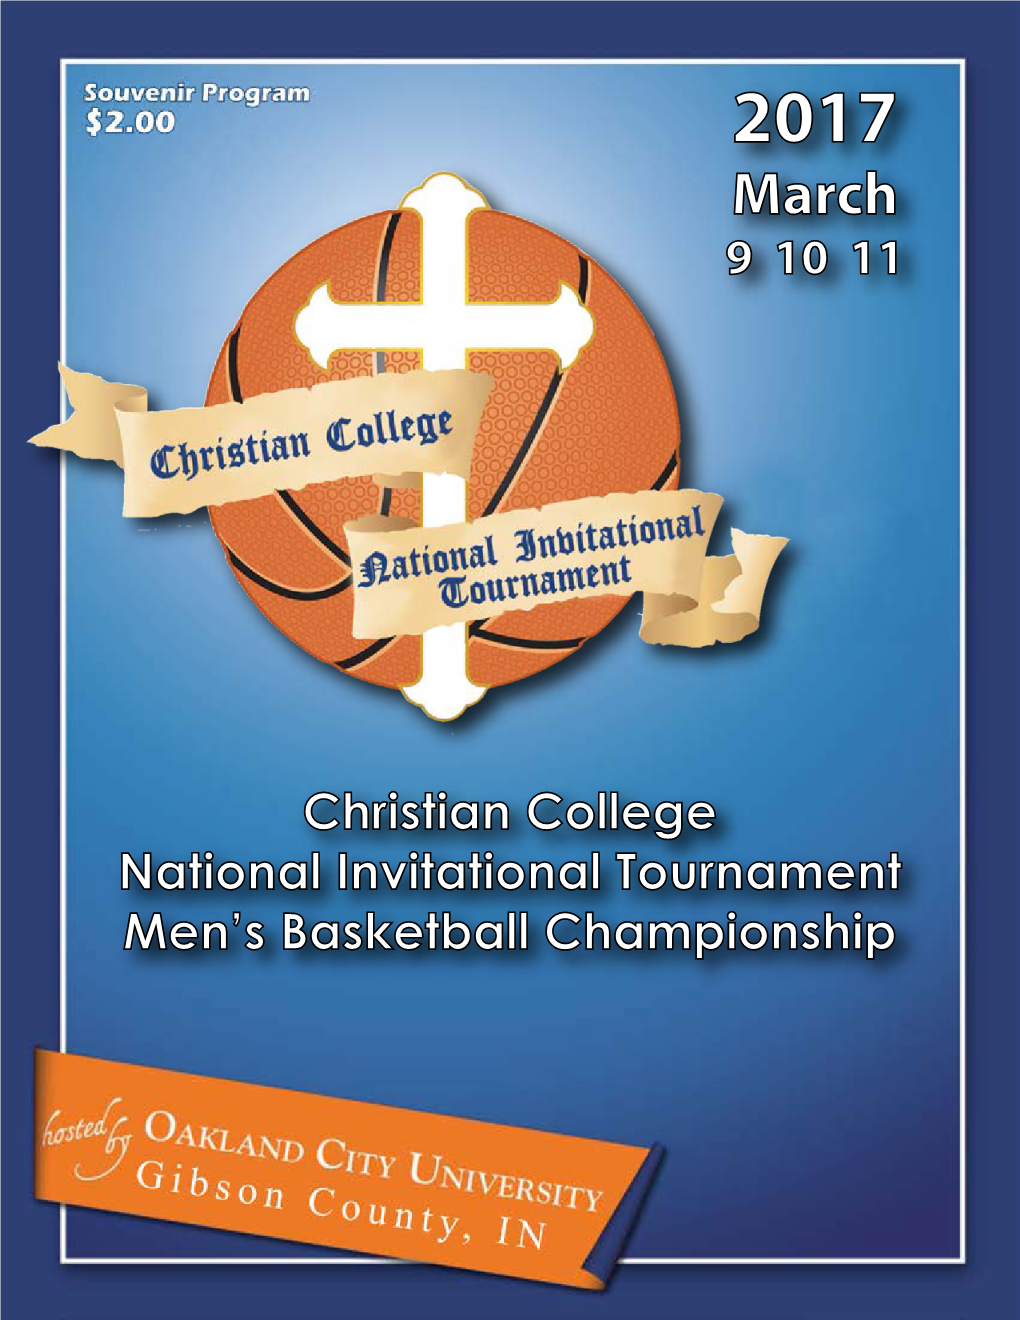 Christian College National Invitational Tournament Men's Basketball